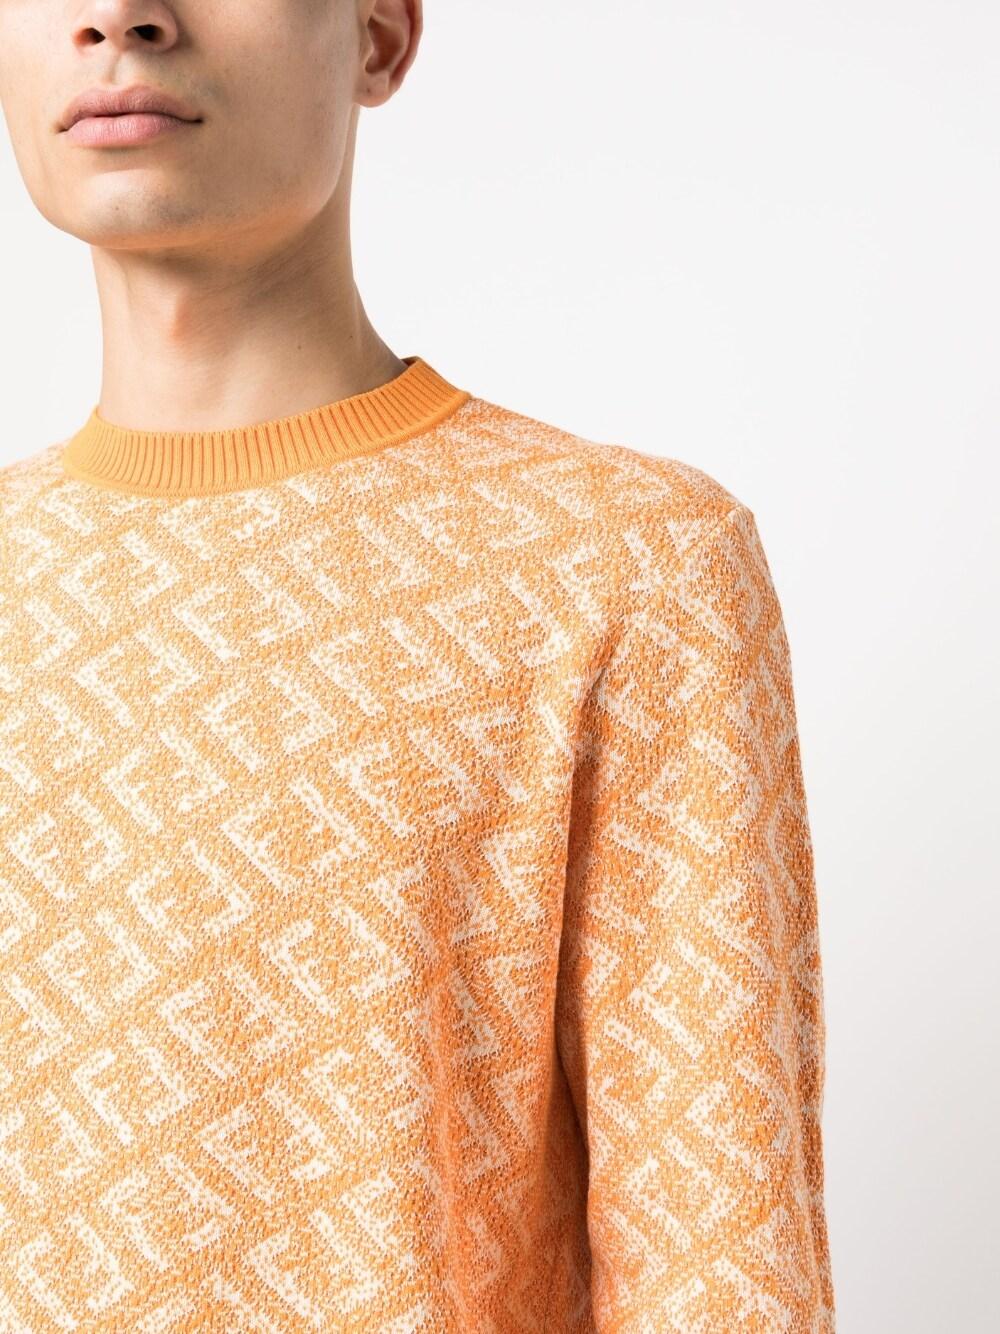 Fendi Monogram-pattern Knitted Sweater in Orange for Men